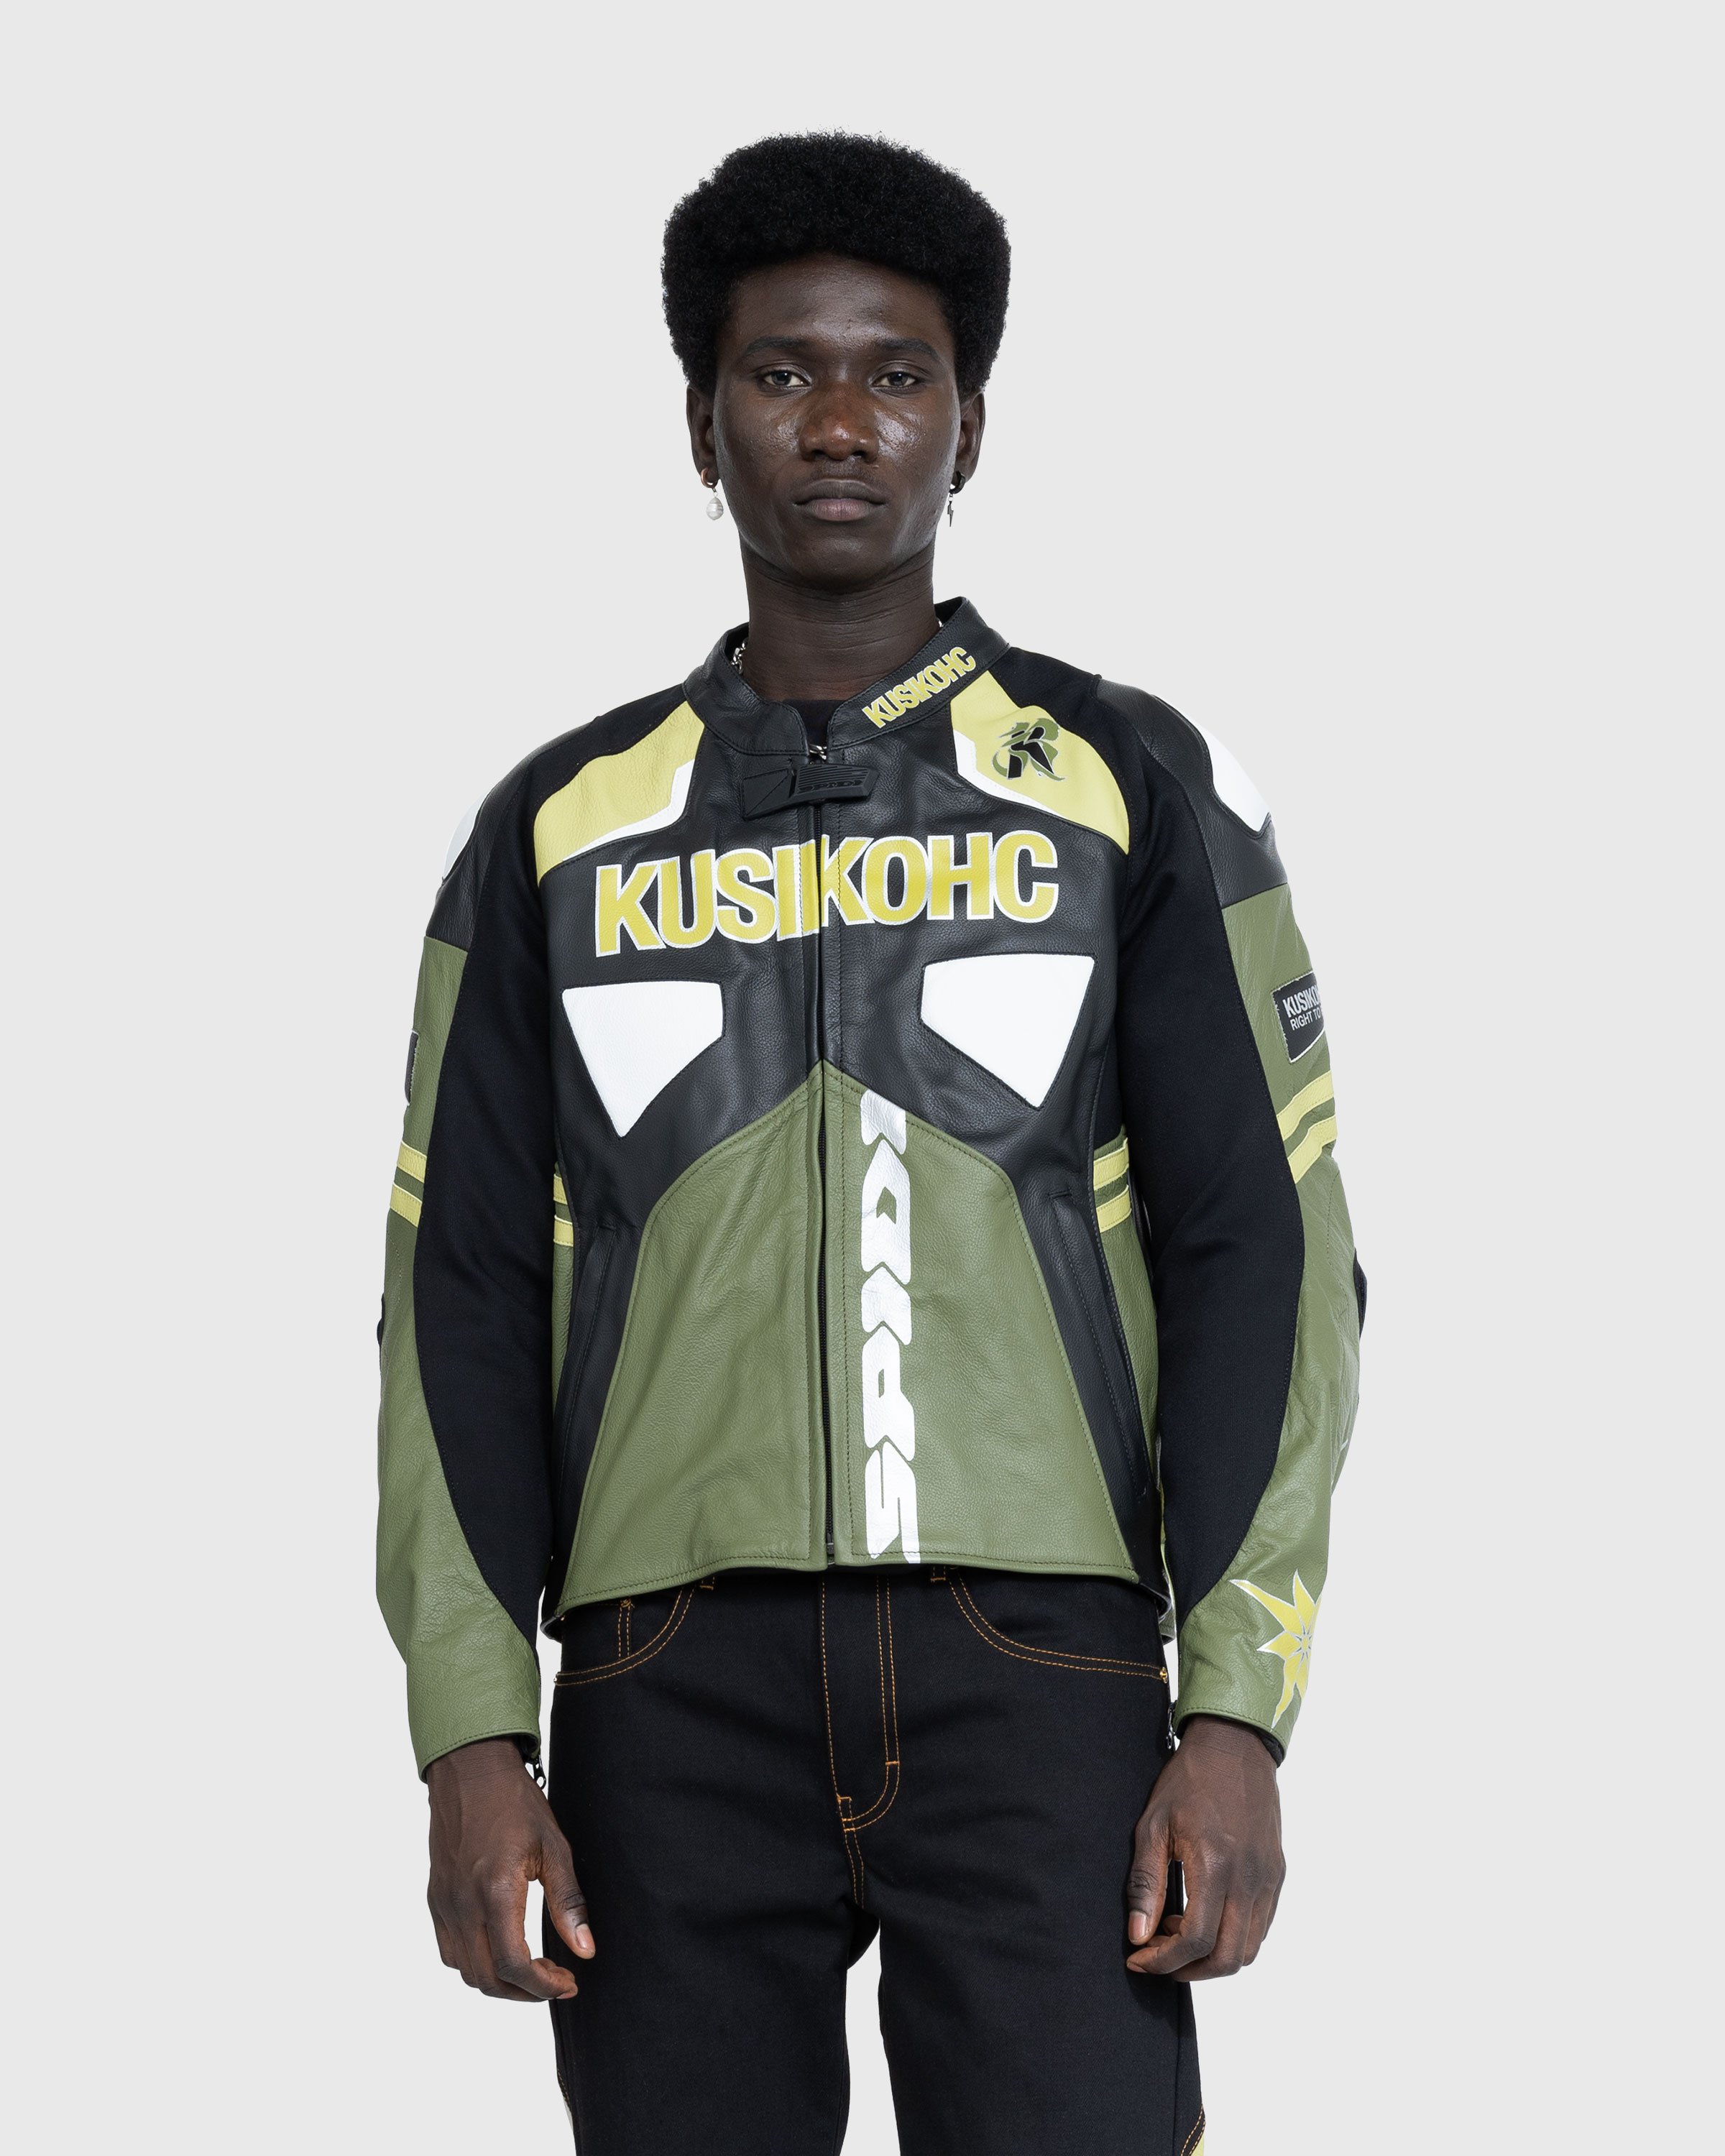 KUSIKOHC - Spidi Rider Jacket Black/Dark Green - Clothing - Multi - Image 2